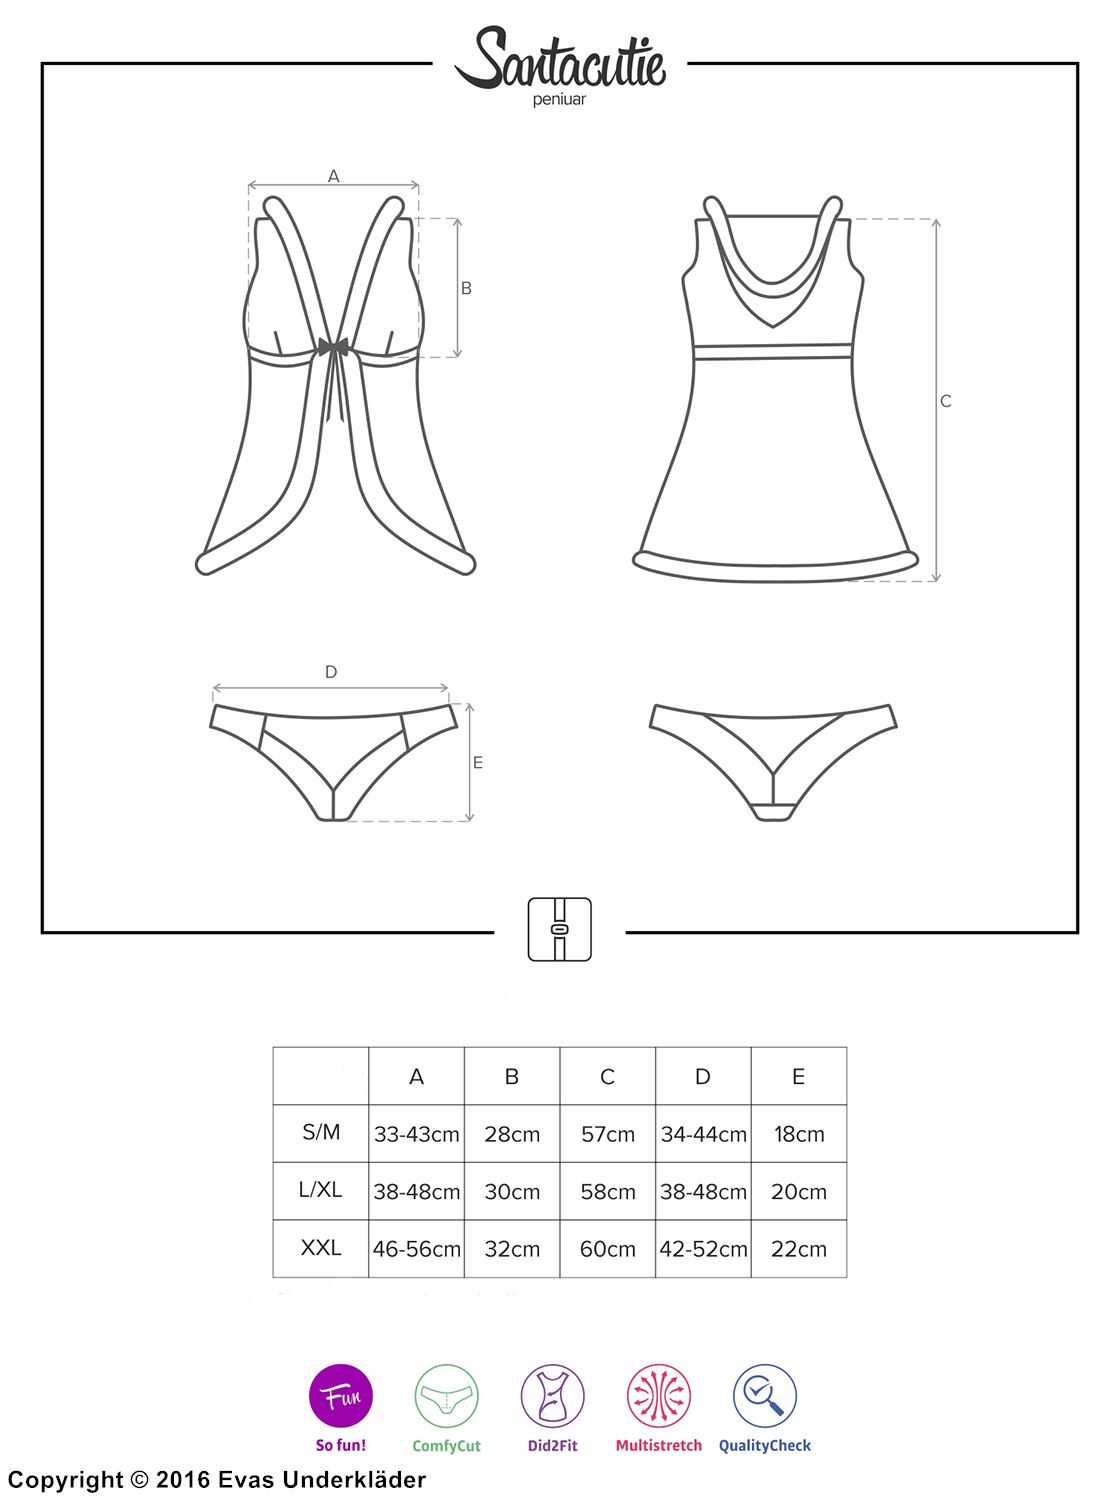 Chistmas lingerie / costume